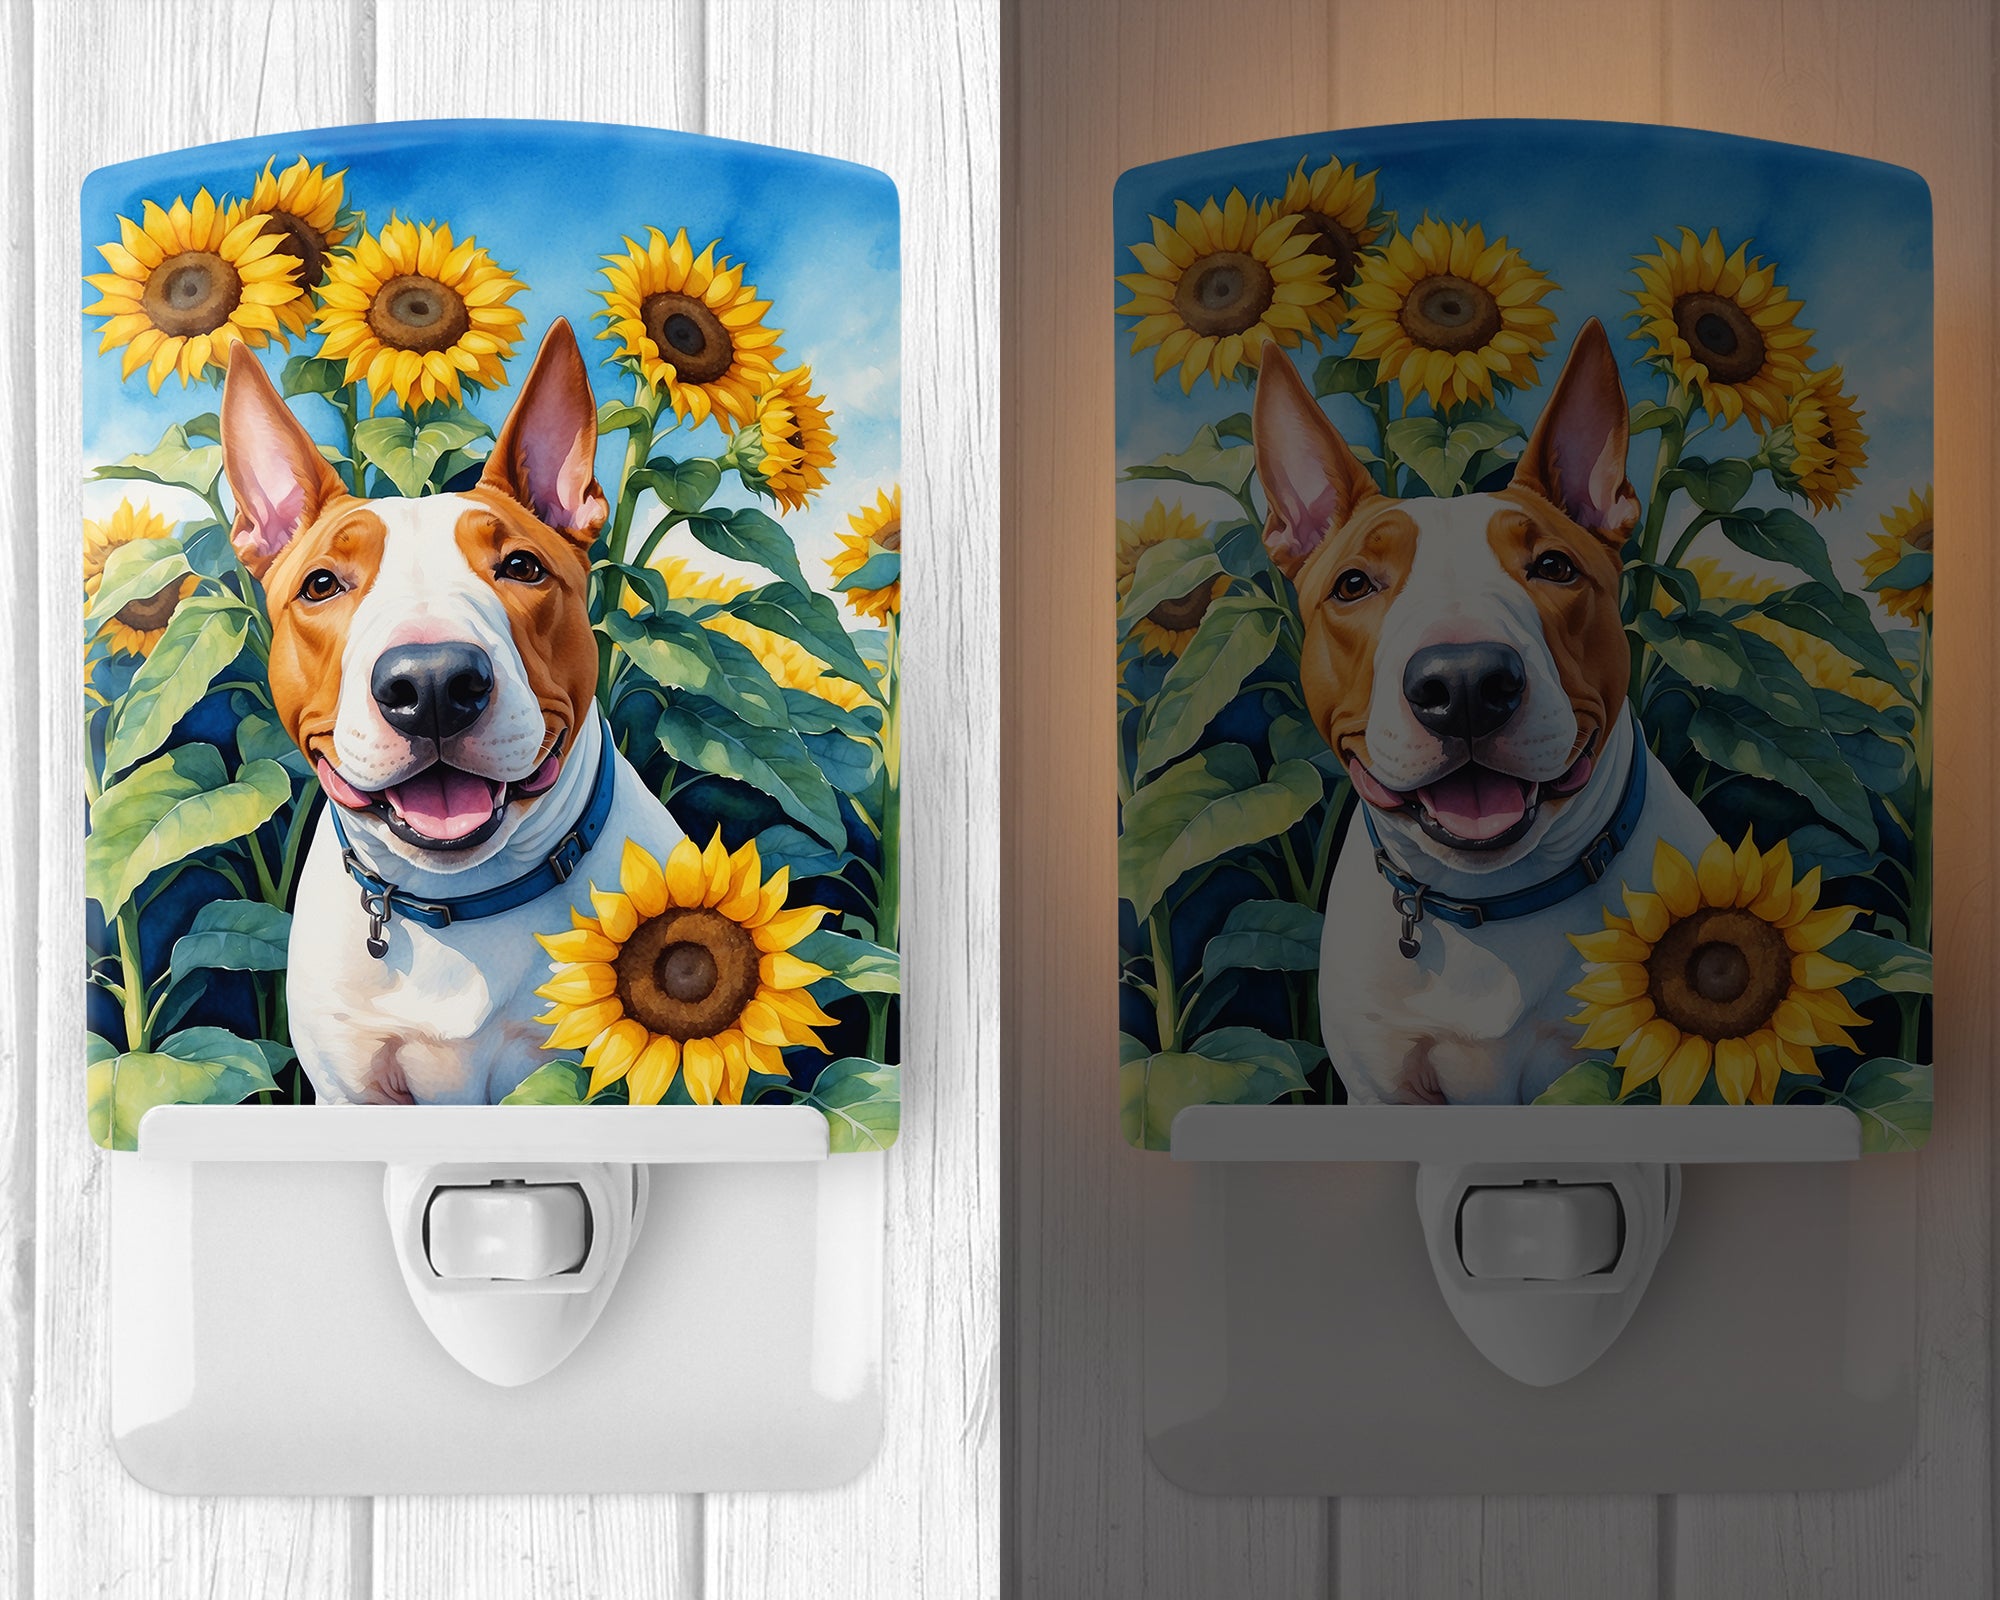 Buy this English Bull Terrier in Sunflowers Ceramic Night Light